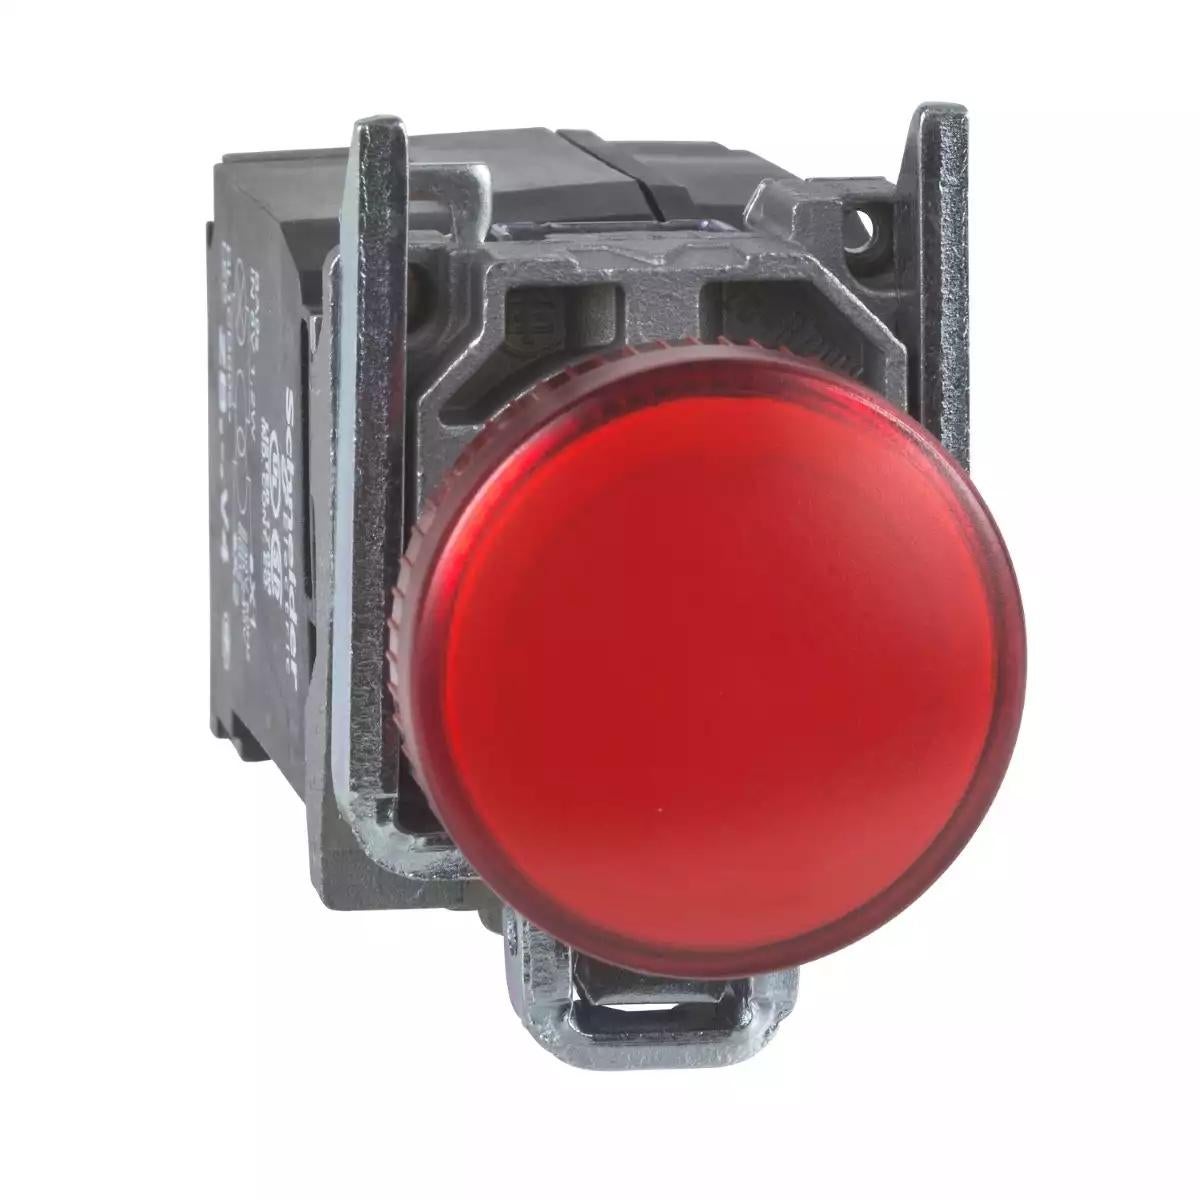 Pilot light, metal, red, Ø22, plain lens with integral LED, 230...240 VAC